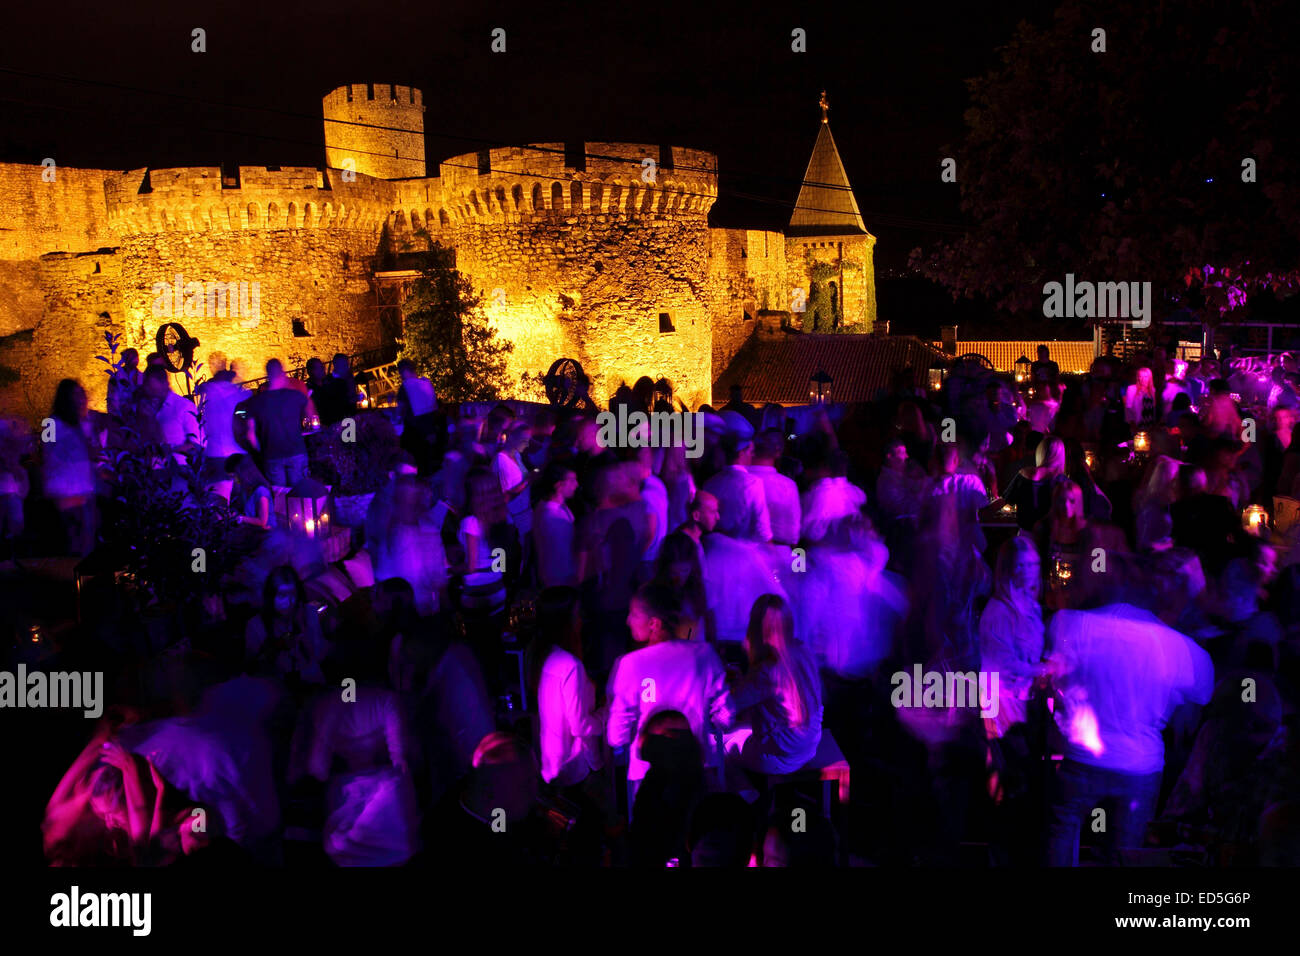 People dancing at the Terrassa night club in Belgrade, Serbia. The Zindan Gate of the Kalmegdan fortress stands illuminated in t Stock Photo